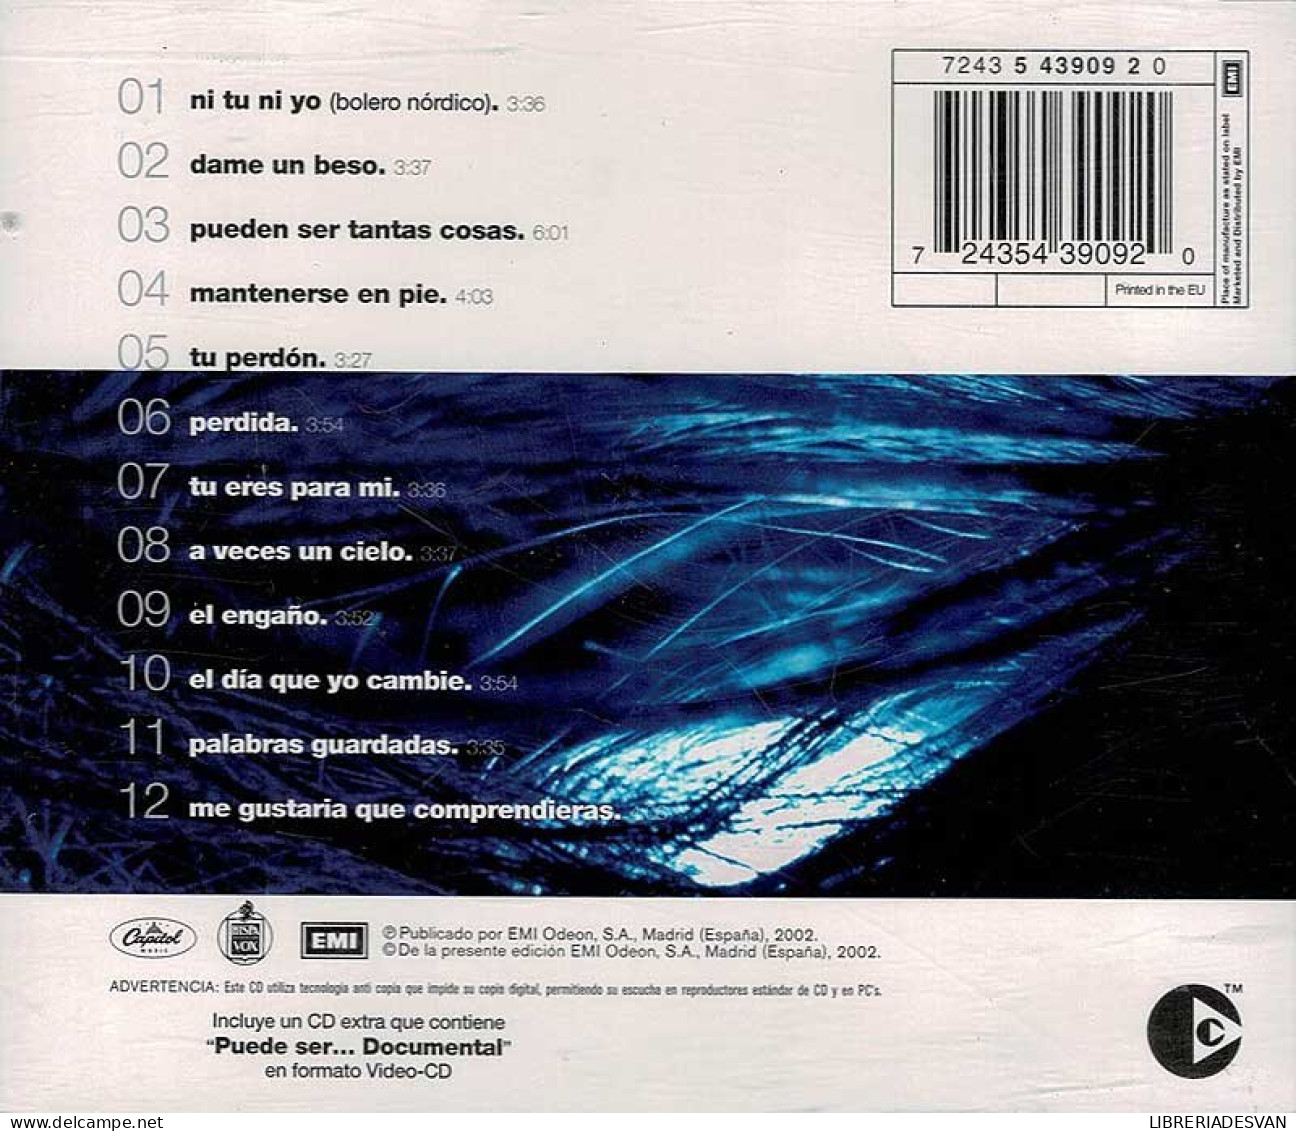 Luz Casal - Con Otra Mirada. CD + VCD - Disco, Pop